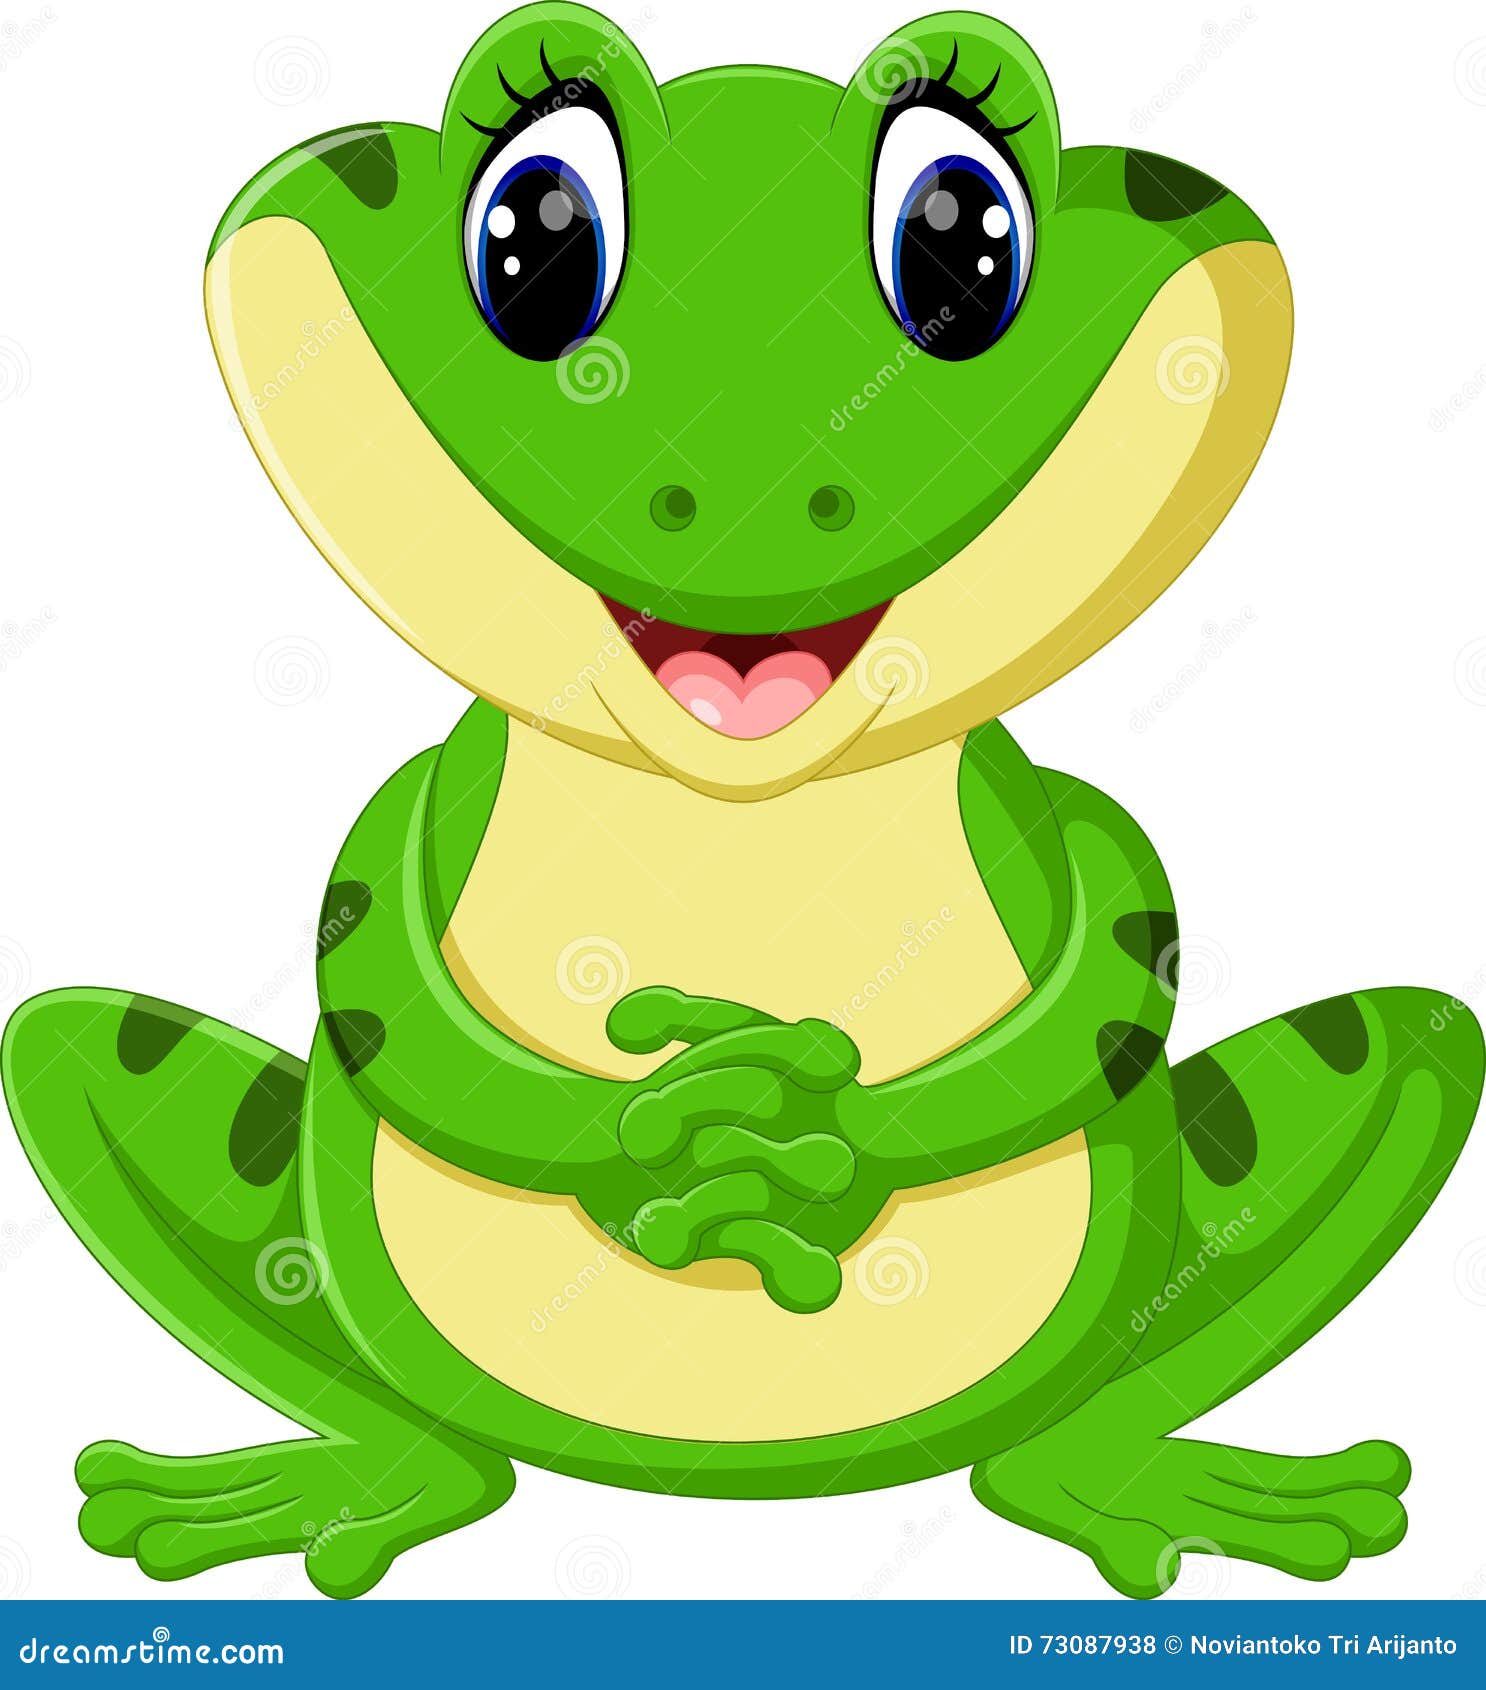 Cute frog cartoon stock vector. Illustration of reptile - 73087938